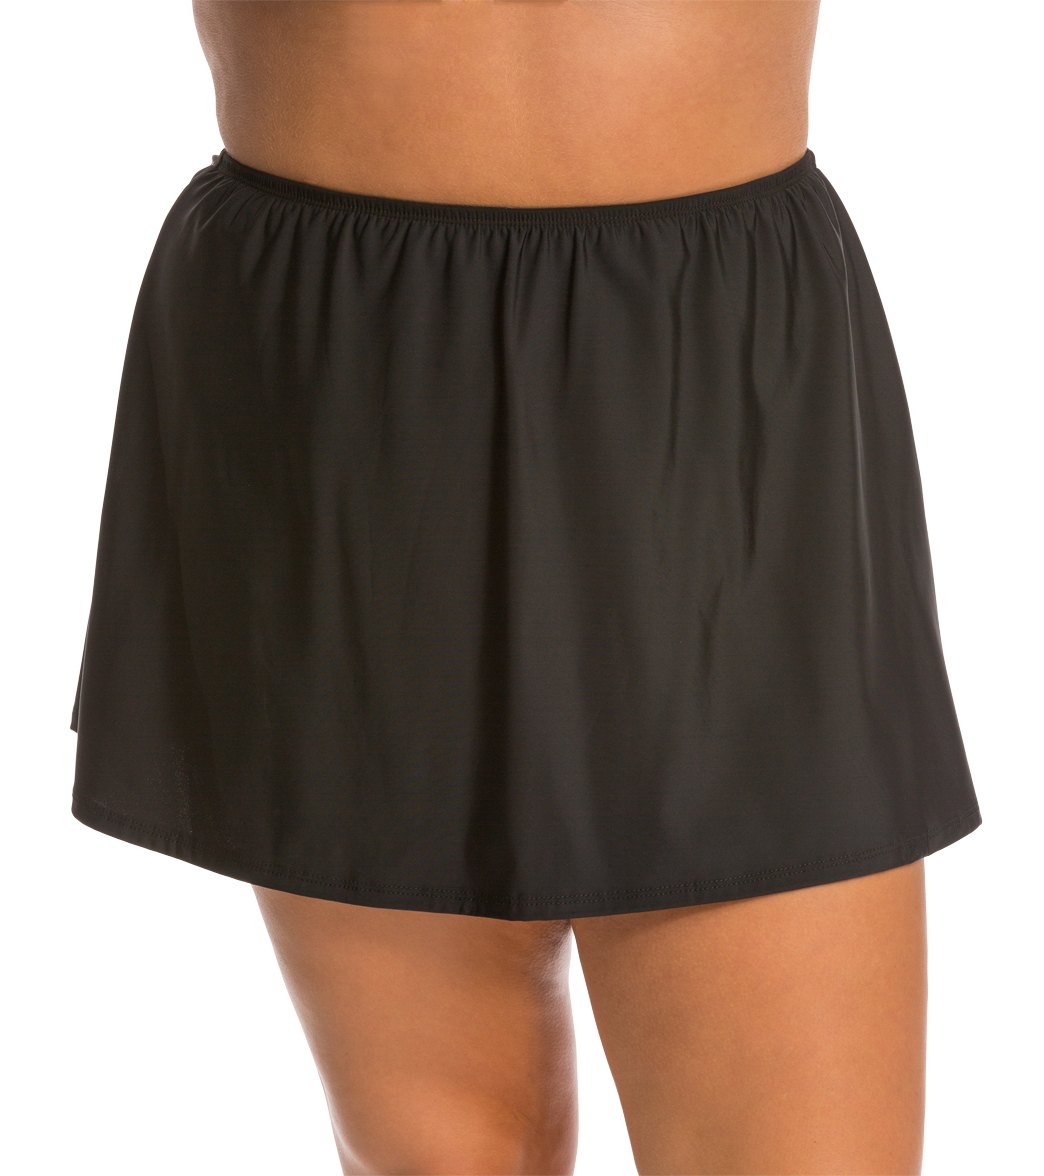 Topanga Plus Size Solid Swim Skirt - Black 24W Nylon/Spandex - Swimoutlet.com